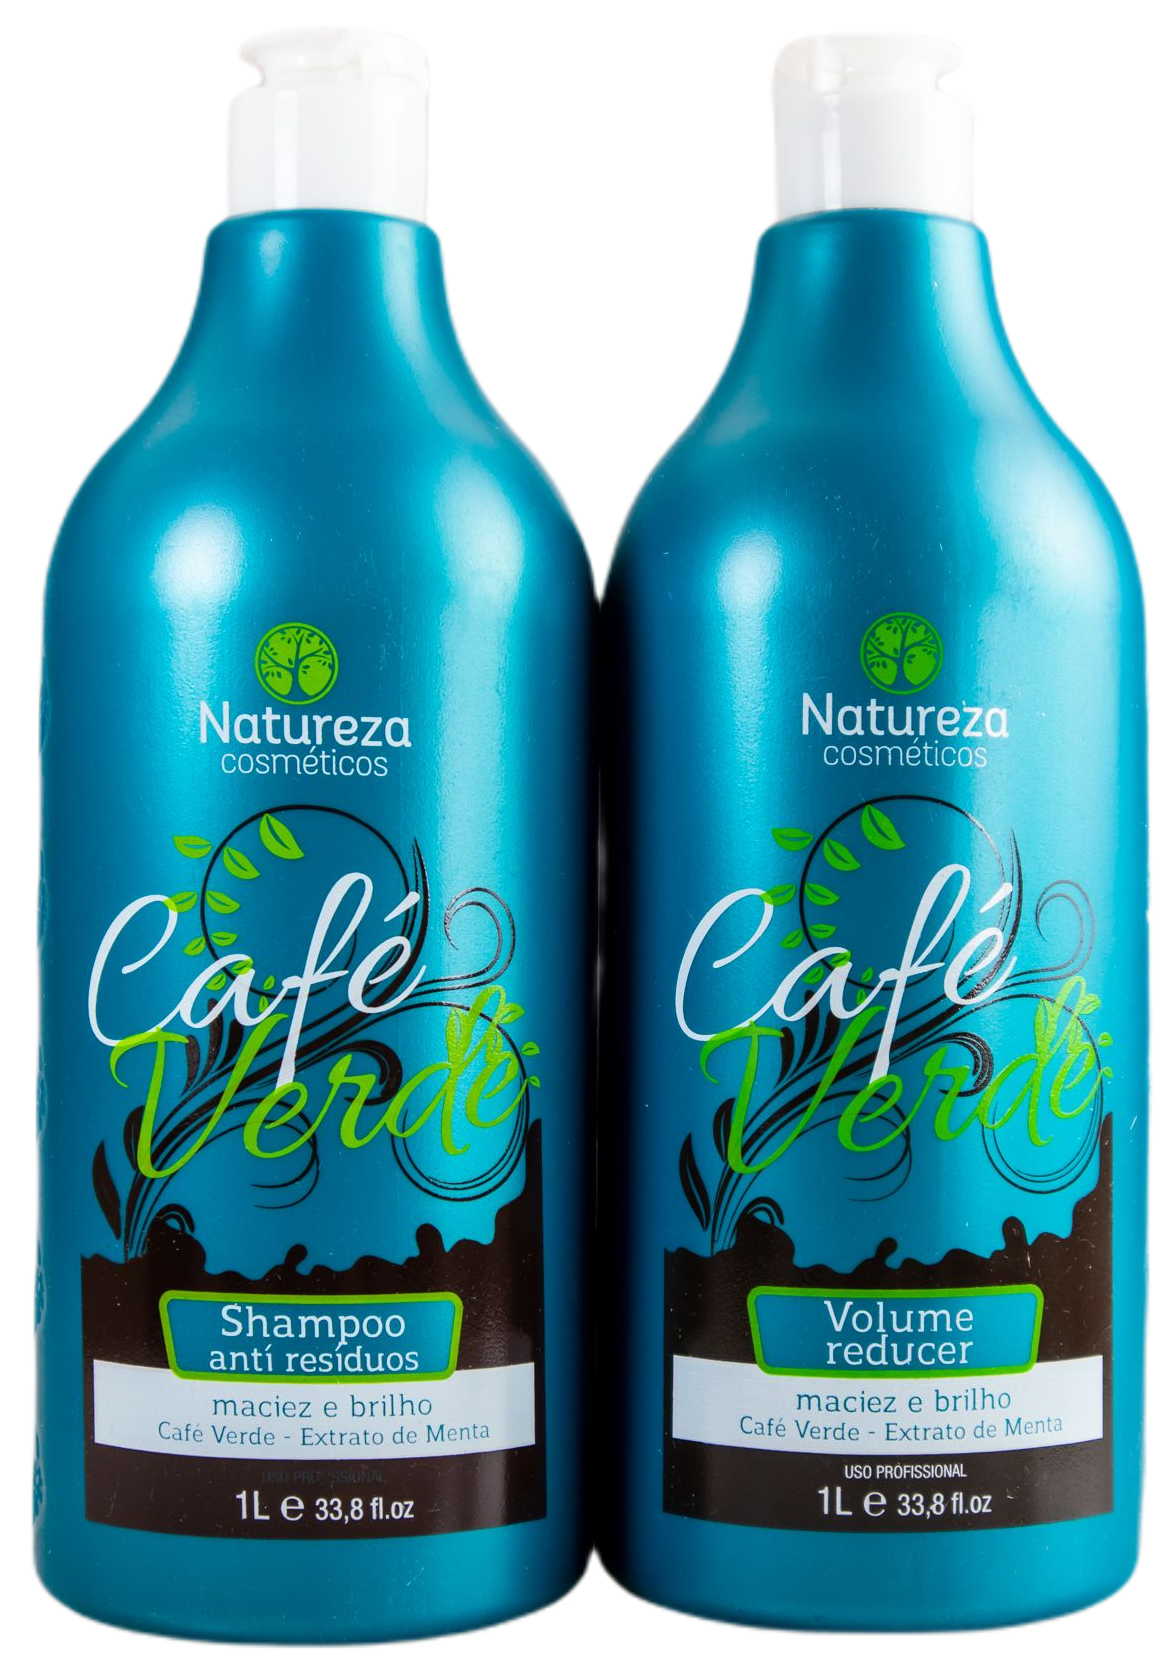 Natureza Cosmetics Brazilian Keratin Treatment Professional Treatment Green Coffee Mint Extract Softness Shine 2x1L - Natureza